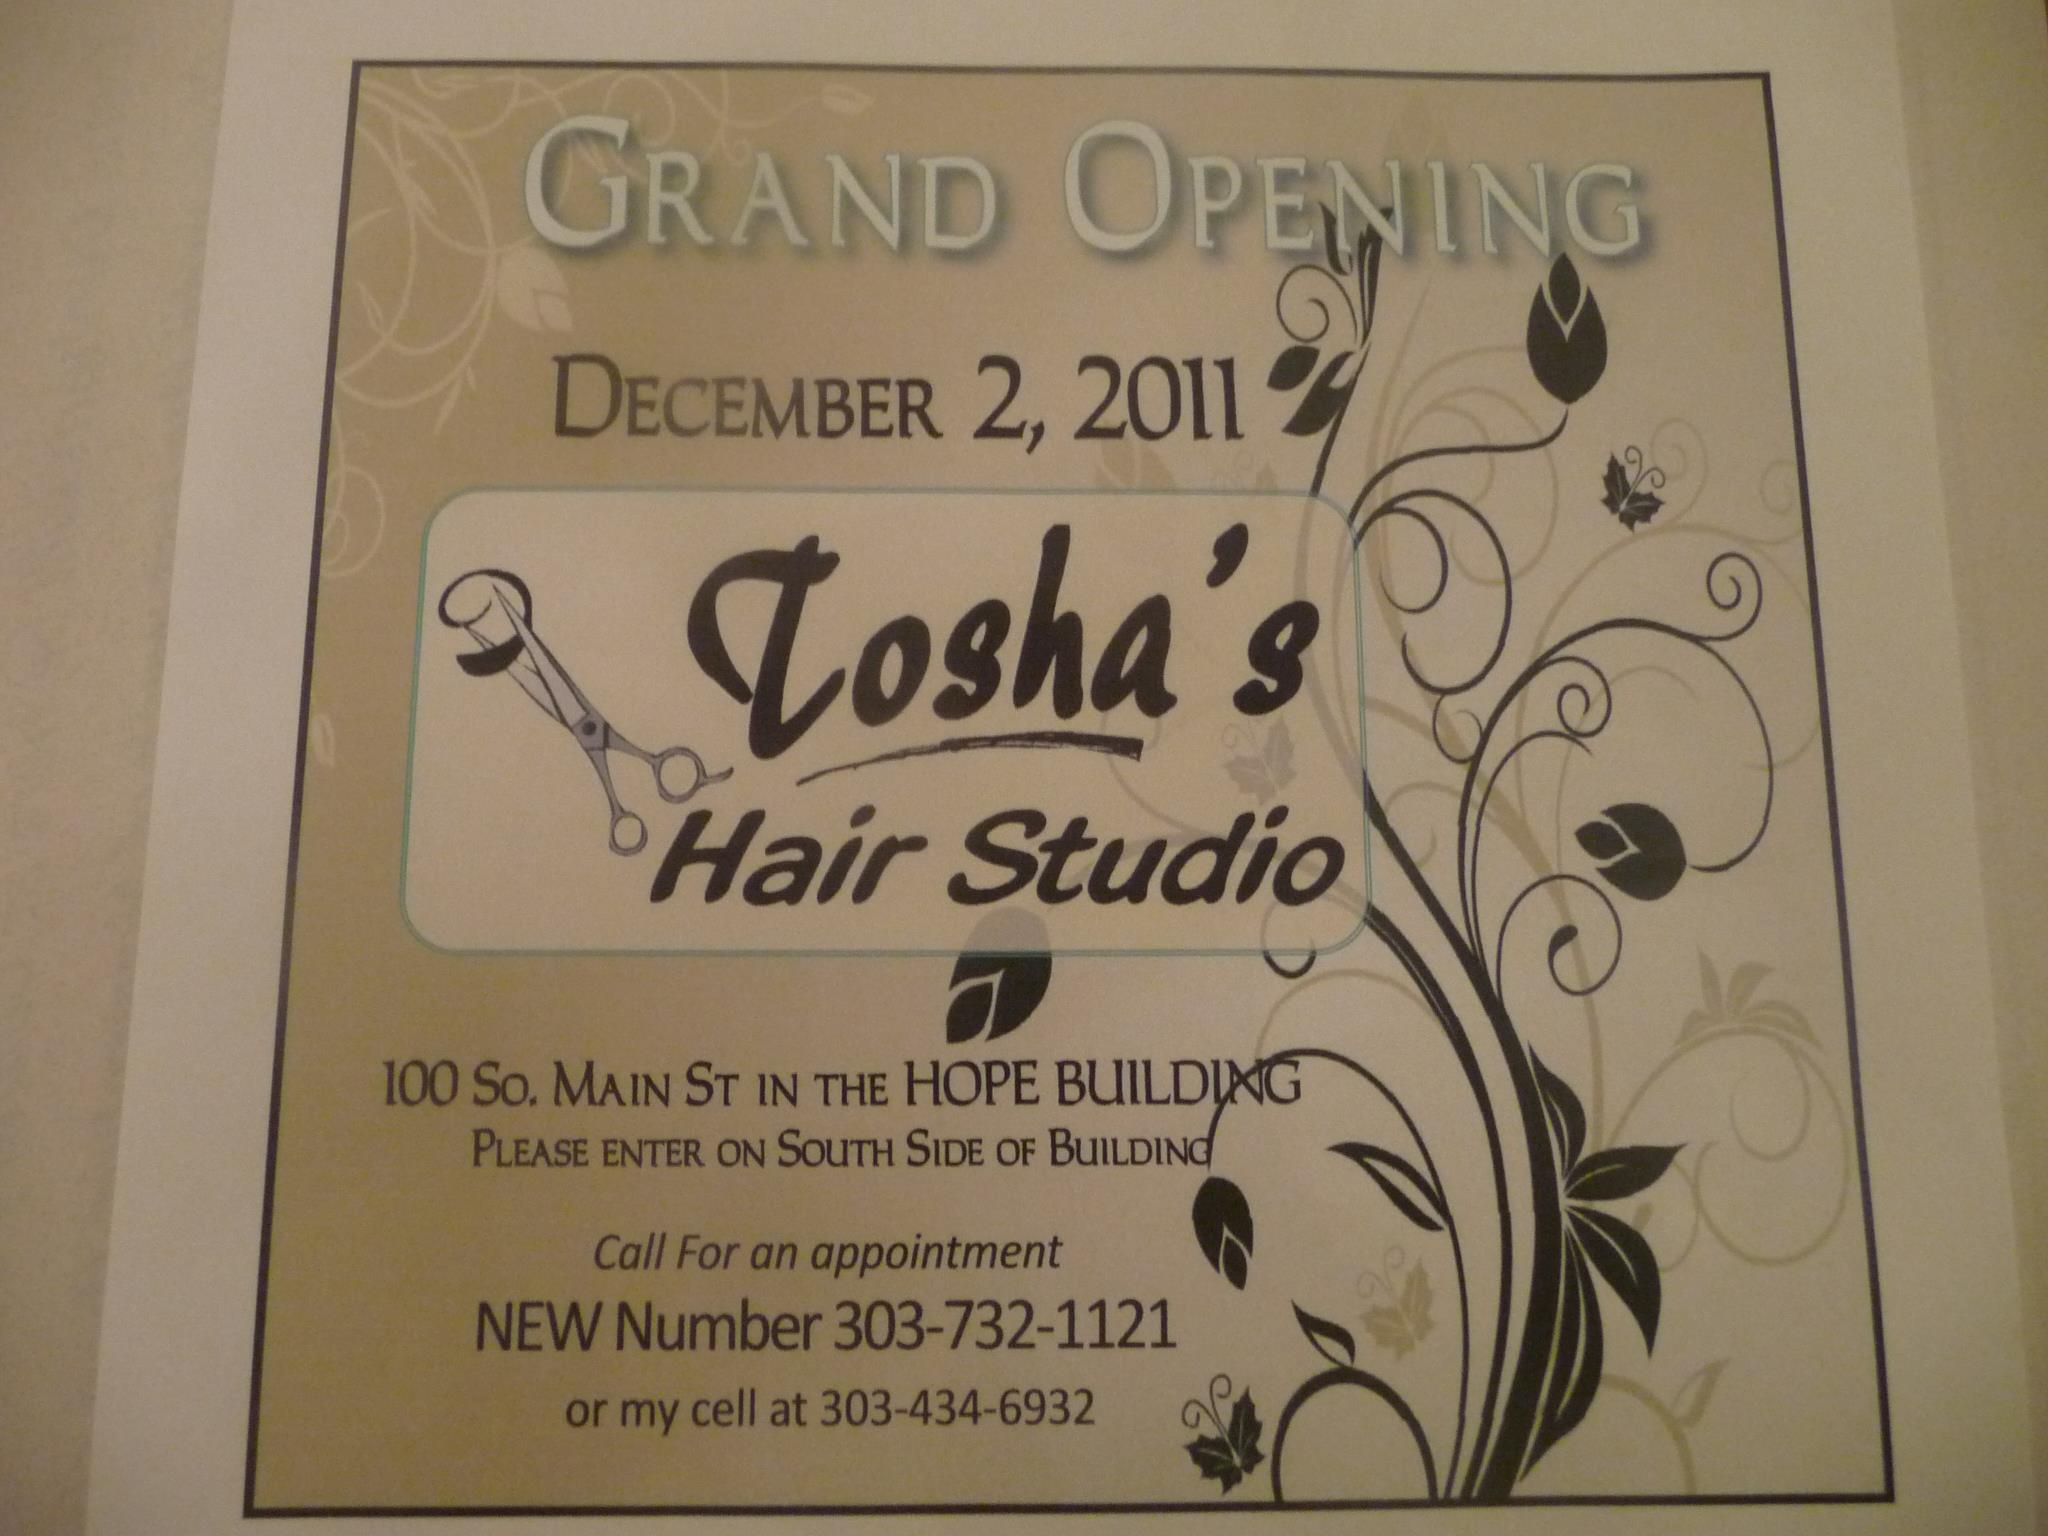 Tosha's Hair Studio 100 Main St, Keenesburg Colorado 80643